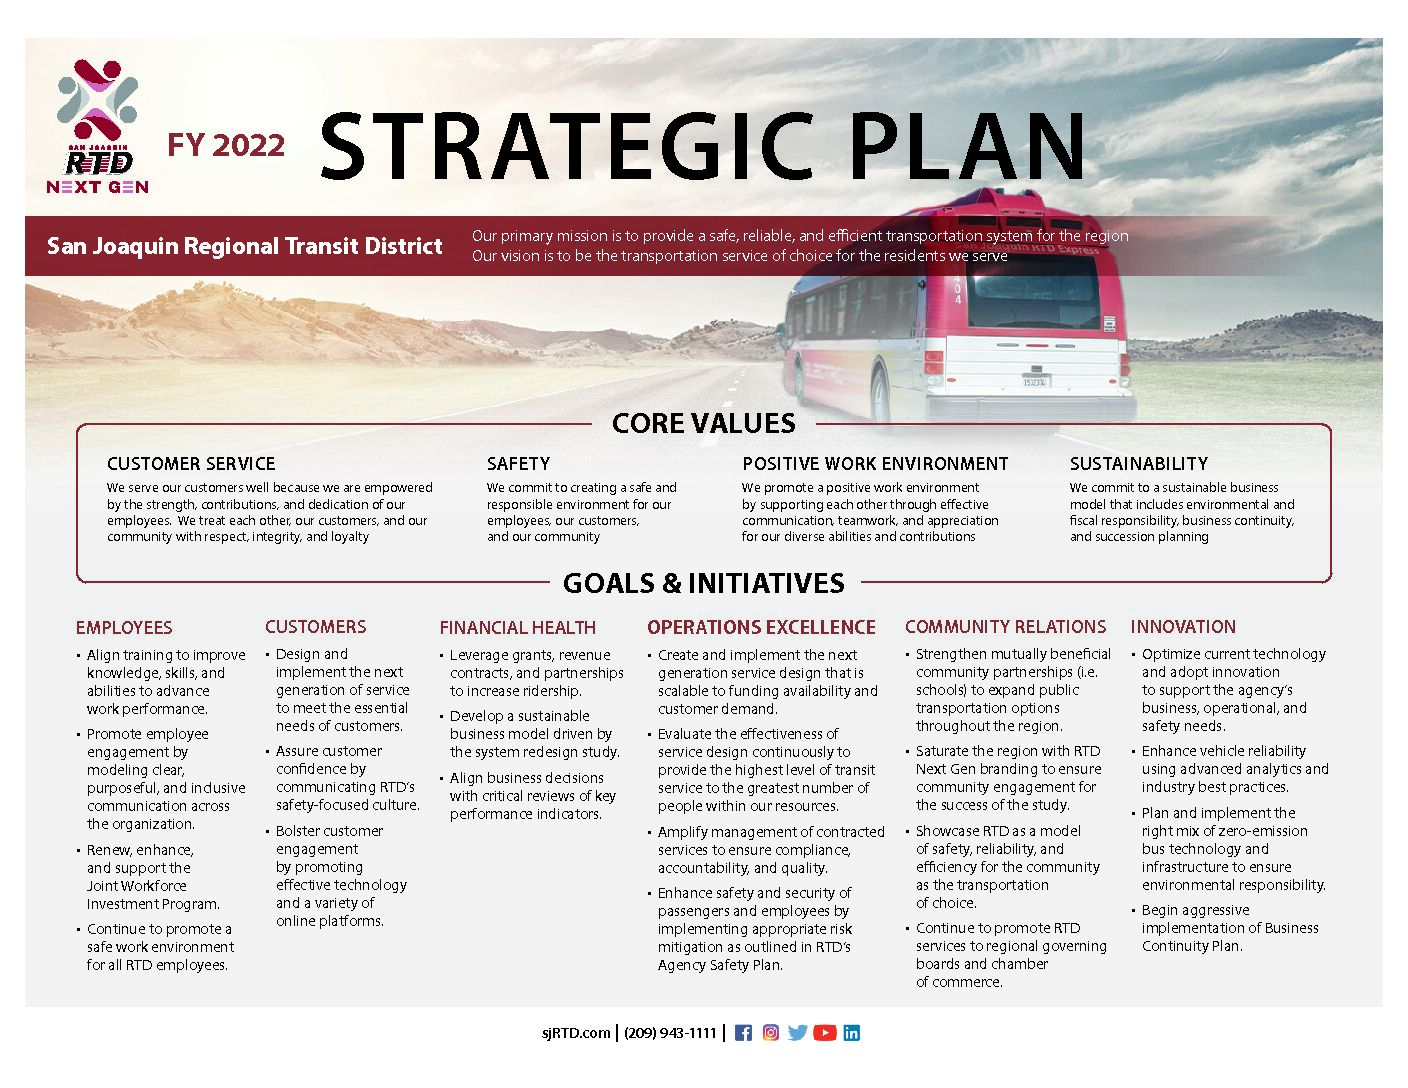 San Joaquin Regional Transit District Fiscal Year 2022 Strategic Plan